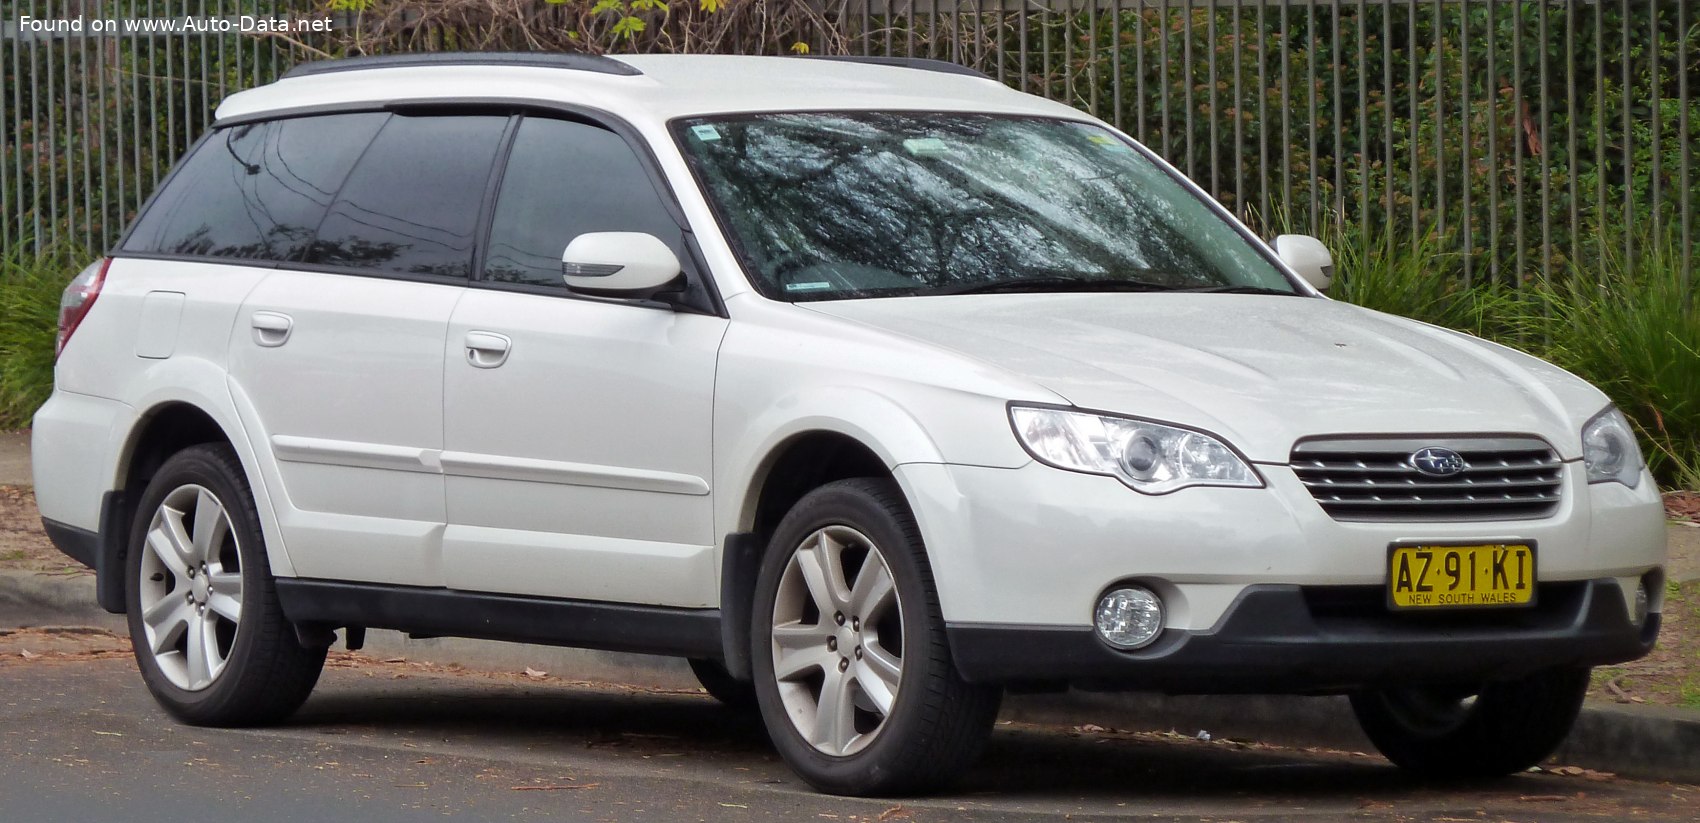 2007 Subaru Outback III (BL,BP) 2.5i (173 Hp) AWD | Technical specs, data,  fuel consumption, Dimensions